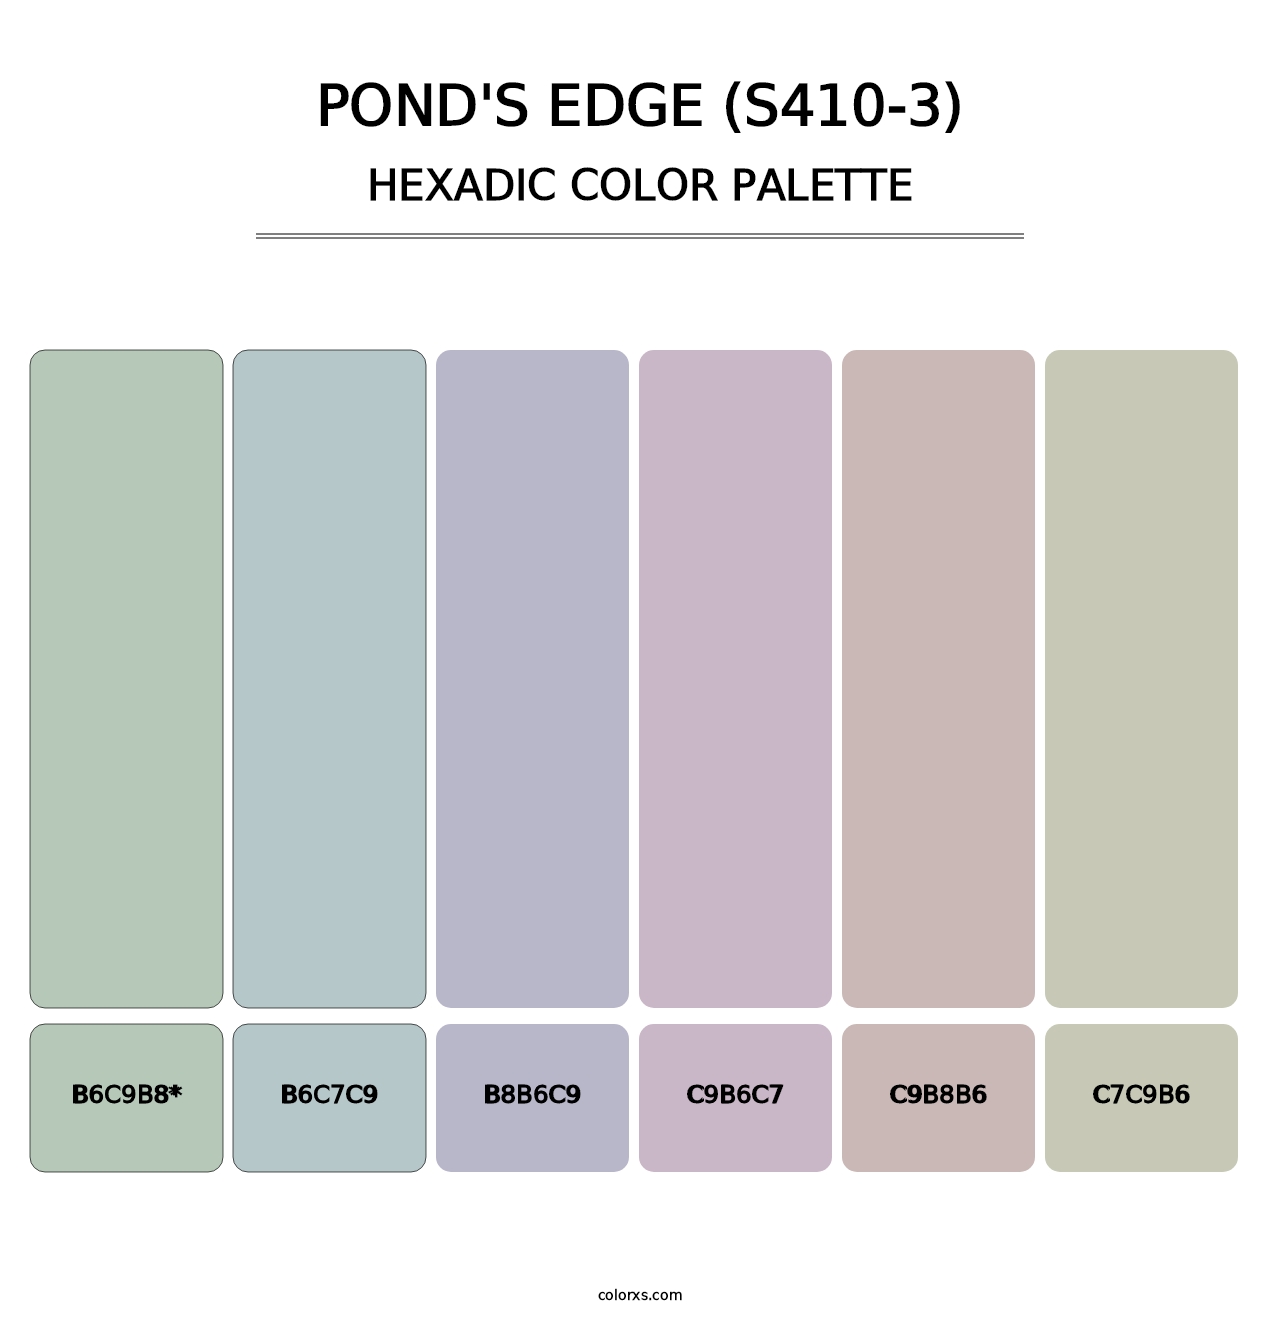 Pond'S Edge (S410-3) - Hexadic Color Palette